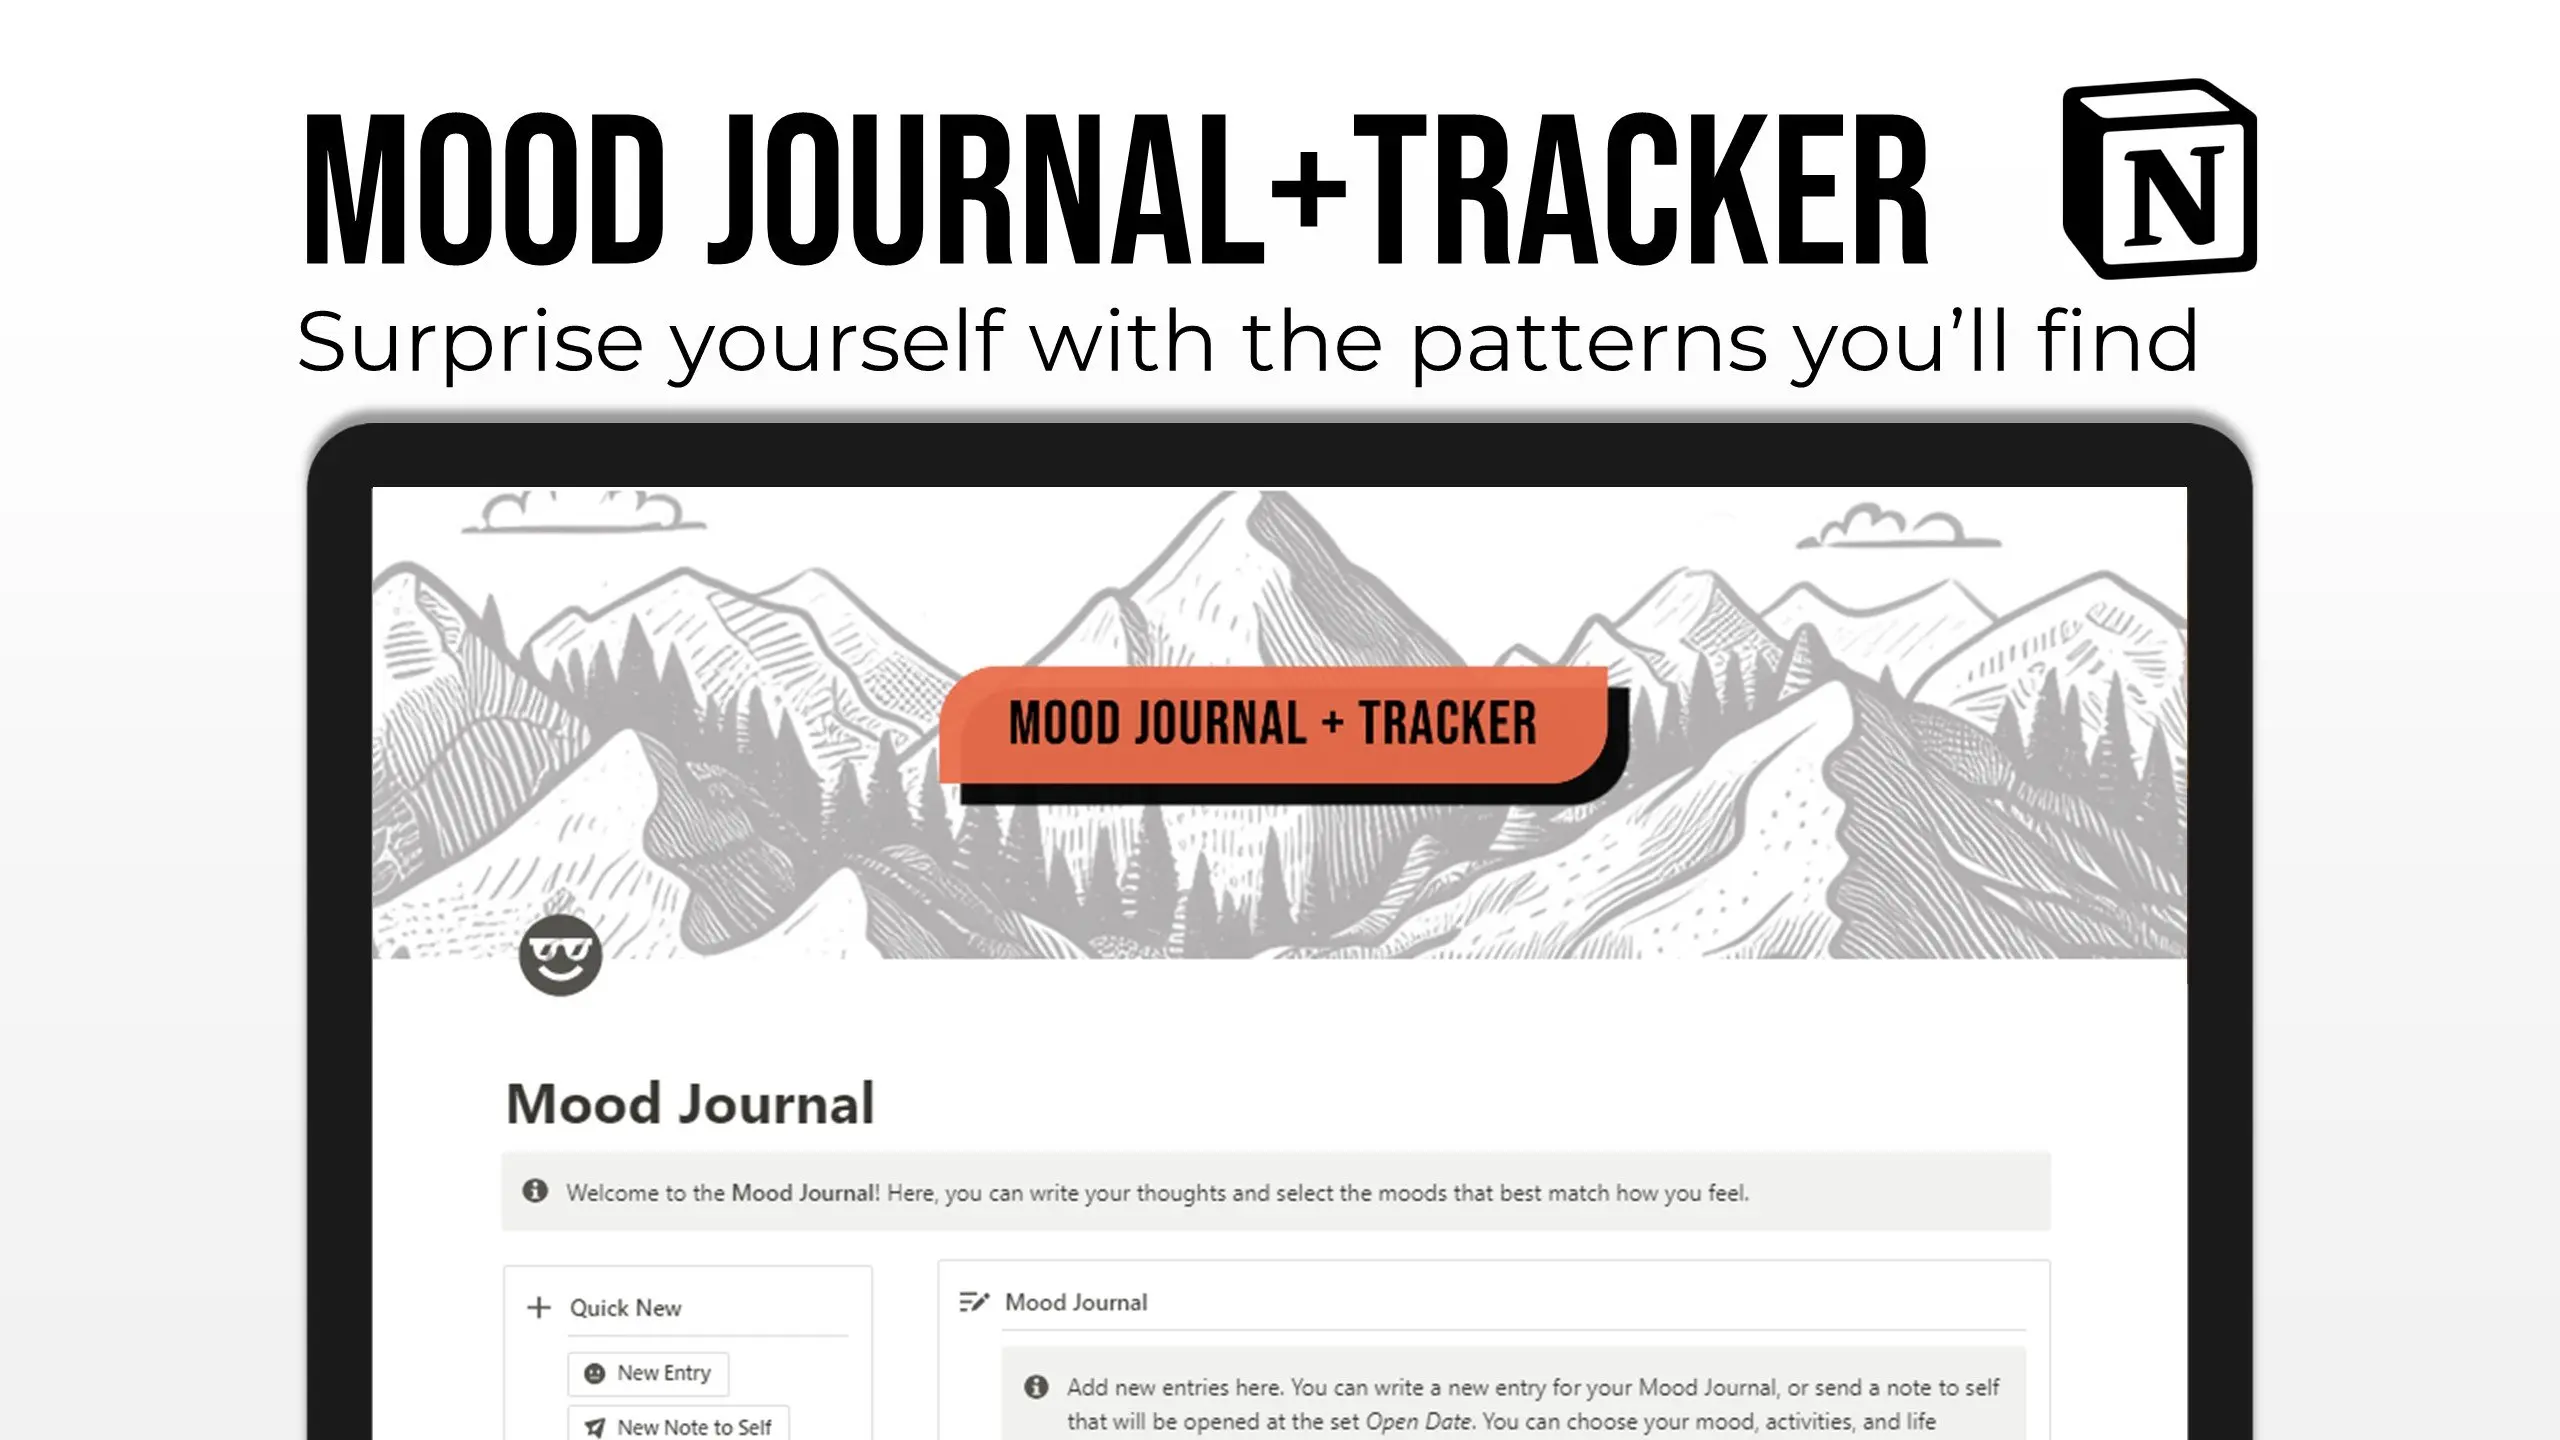 Mood Journal + Tracker image